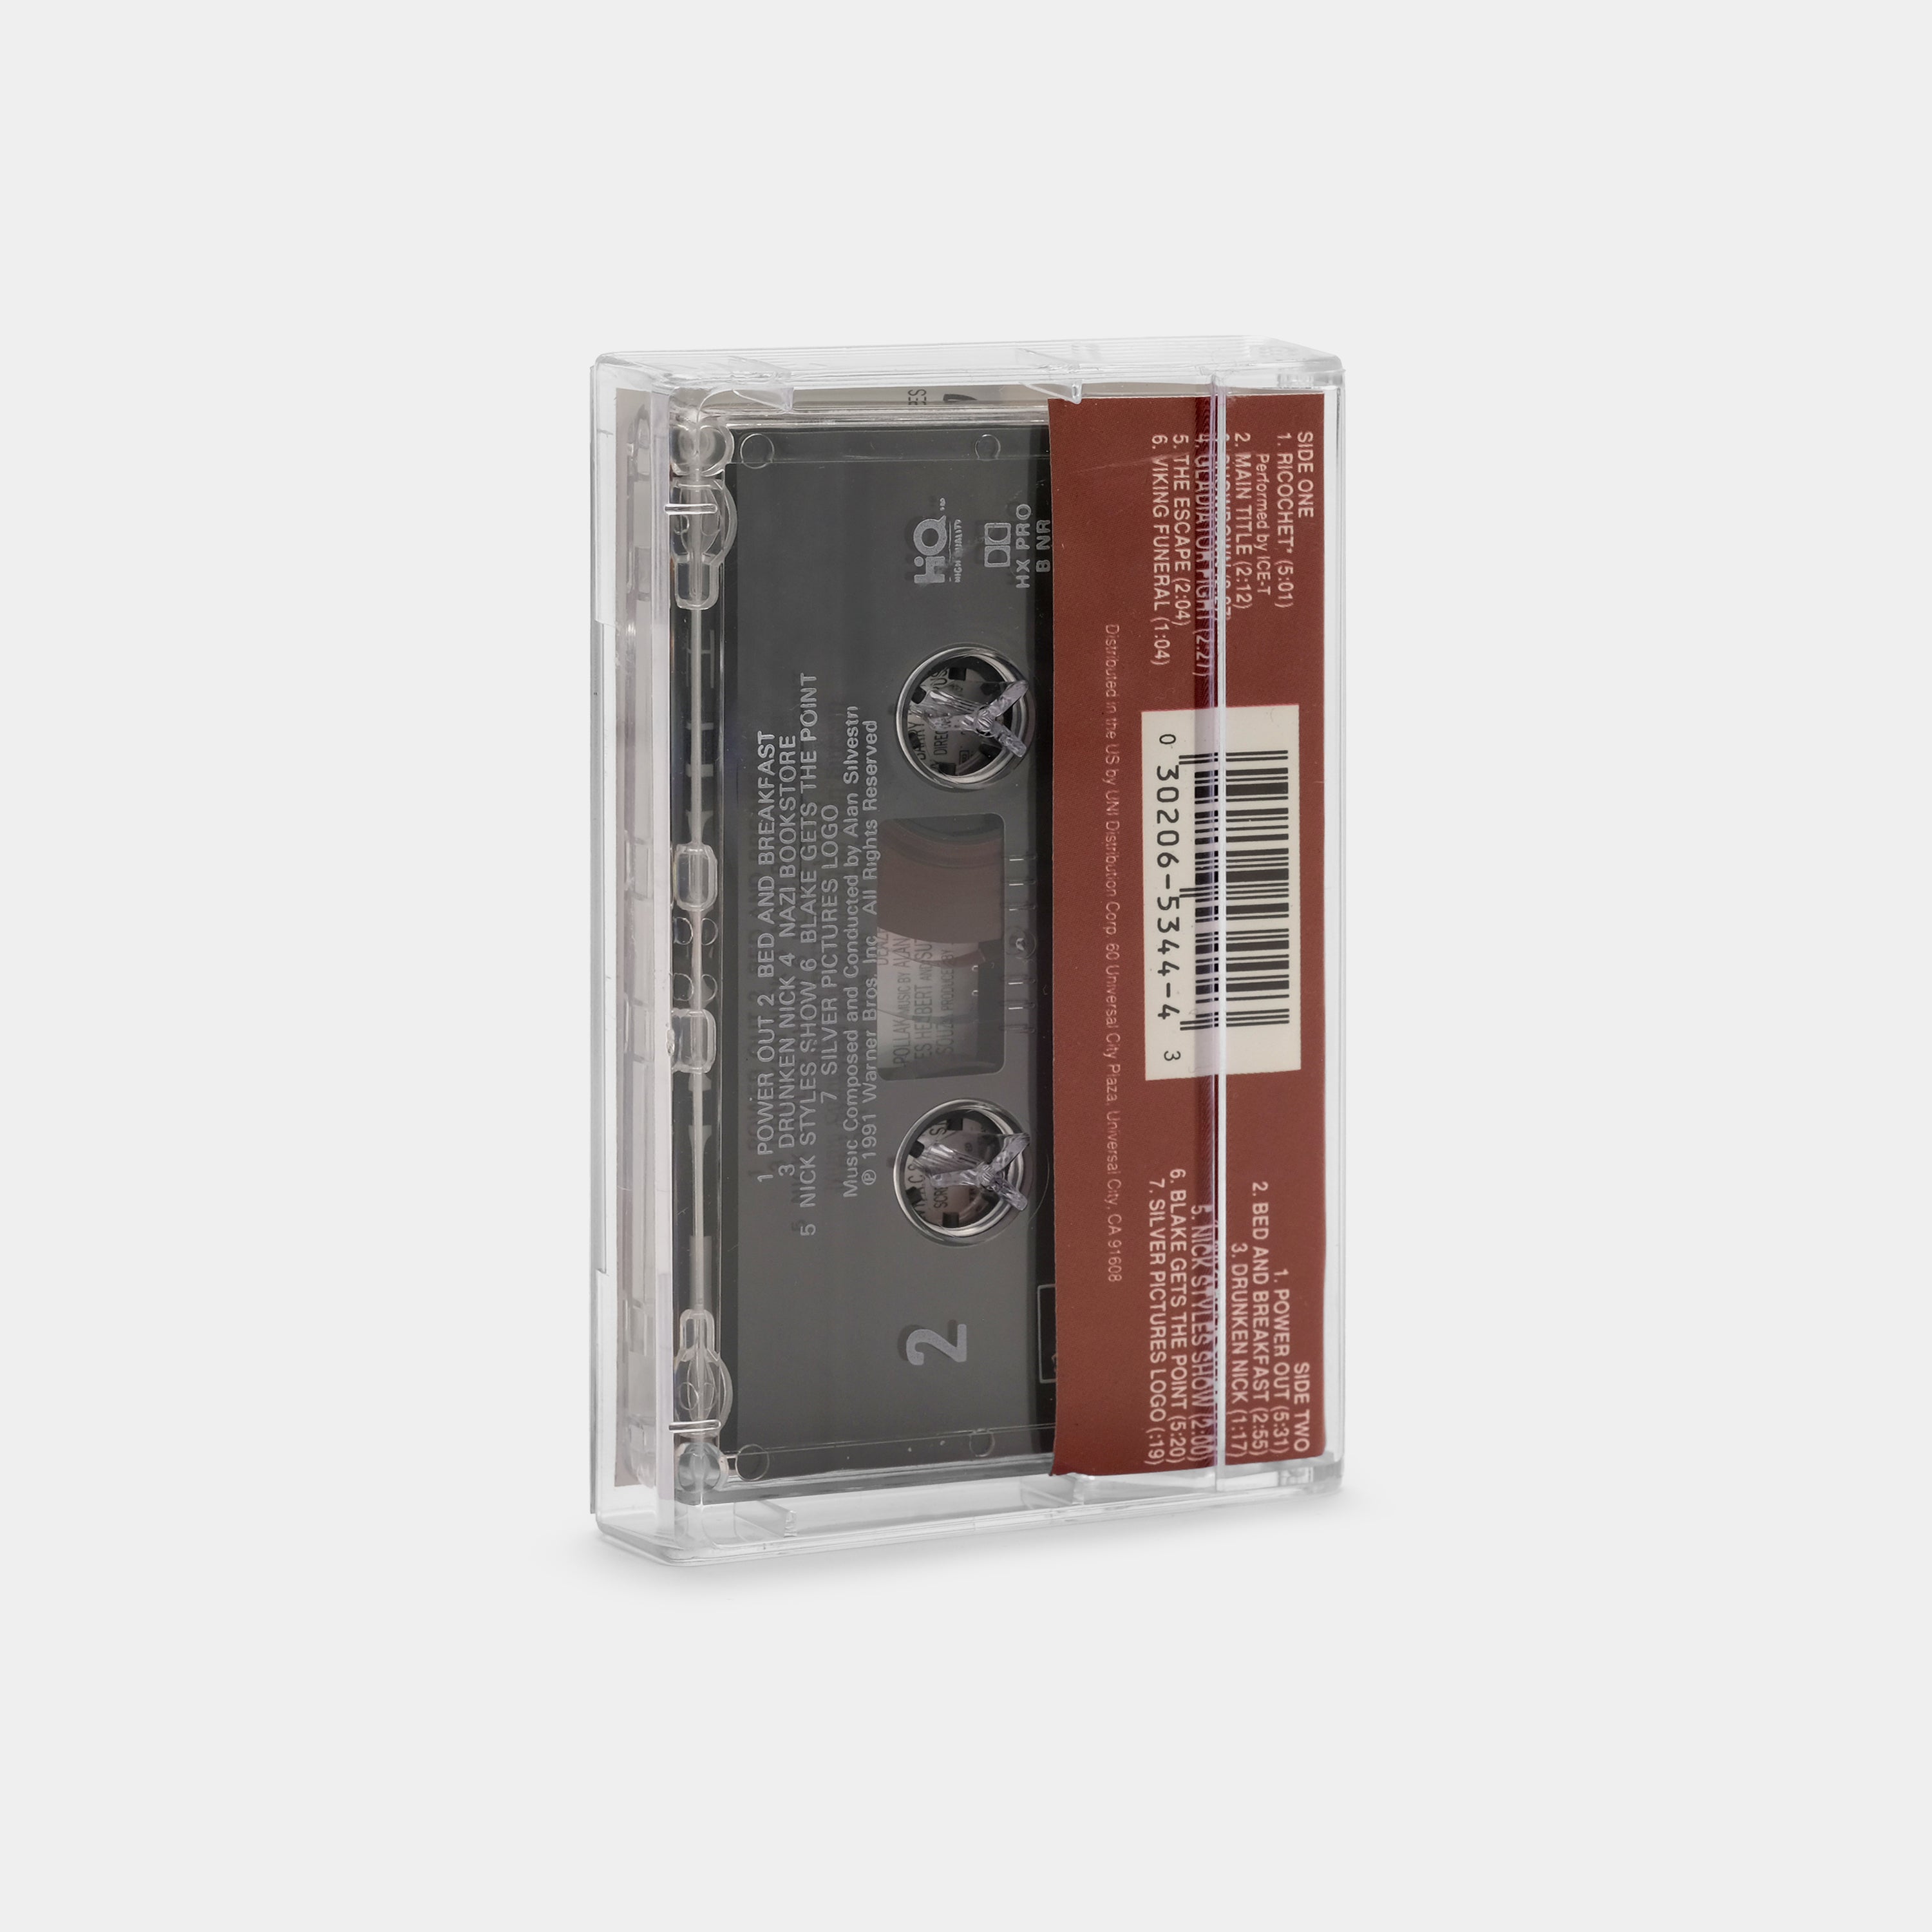 Alan Silvestri - Ricochet (Original Motion Picture Soundtrack) Cassette Tape